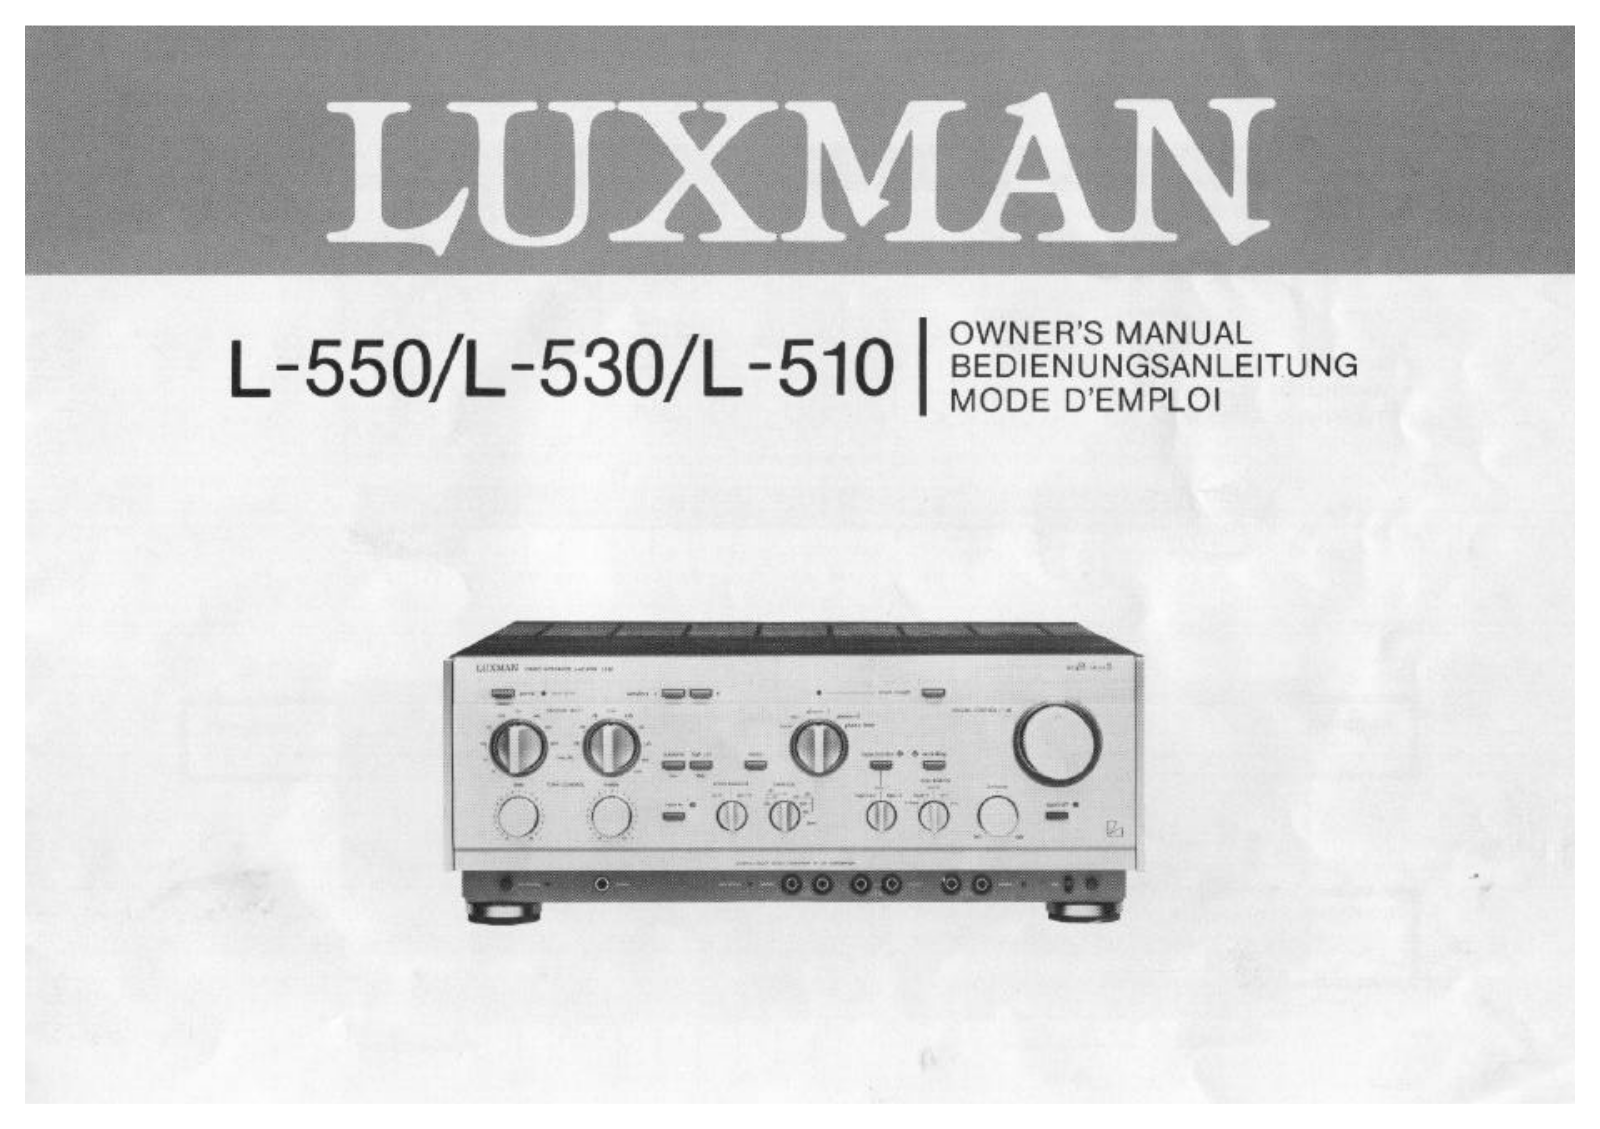 Luxman L-510 Owners manual